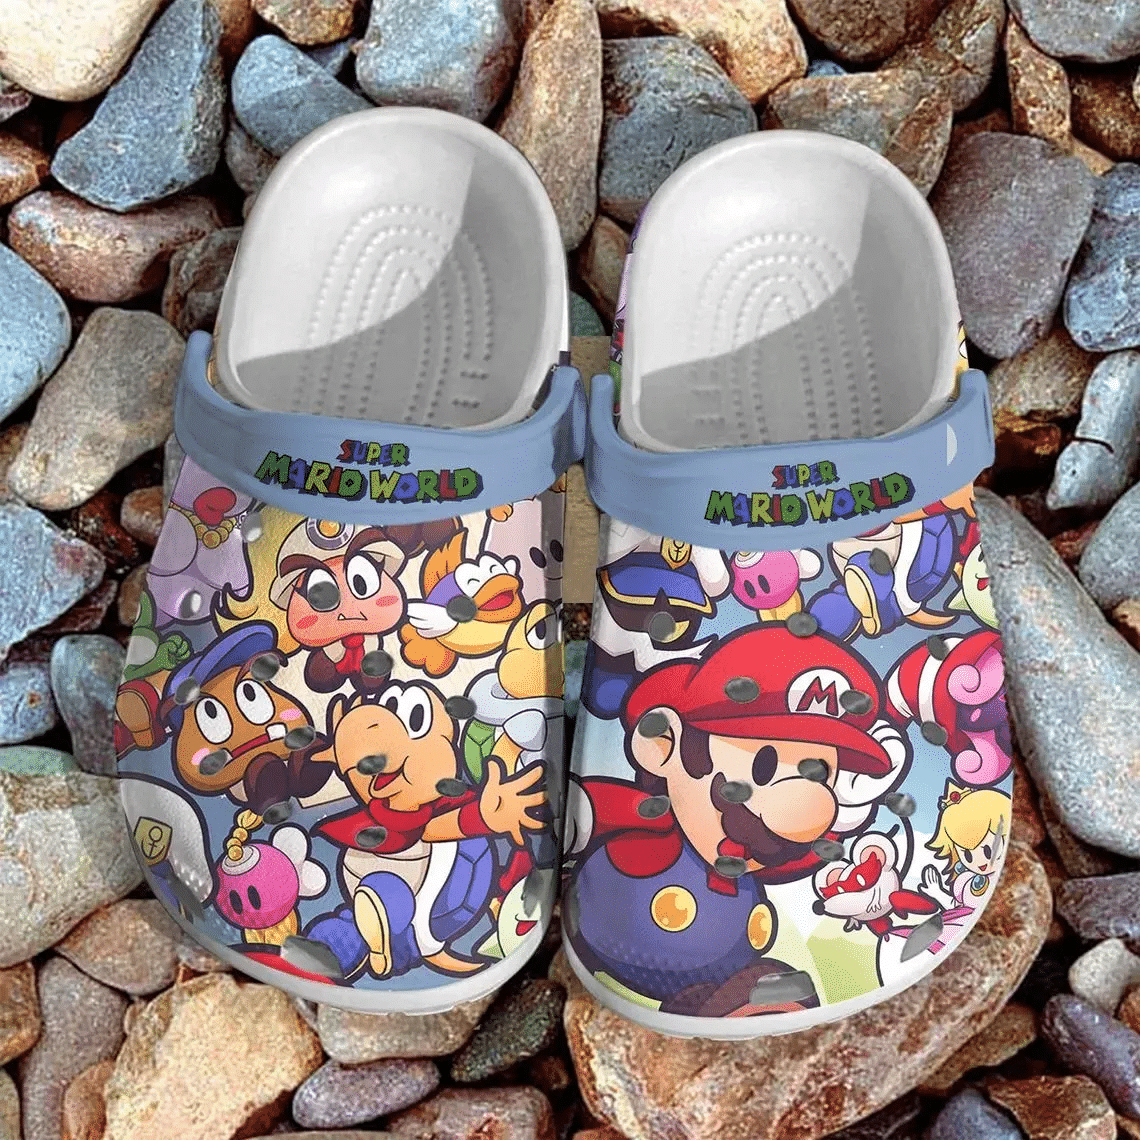 Super Mario Bros Colorful Crocs Crocband Clog Comfortable Water Shoes